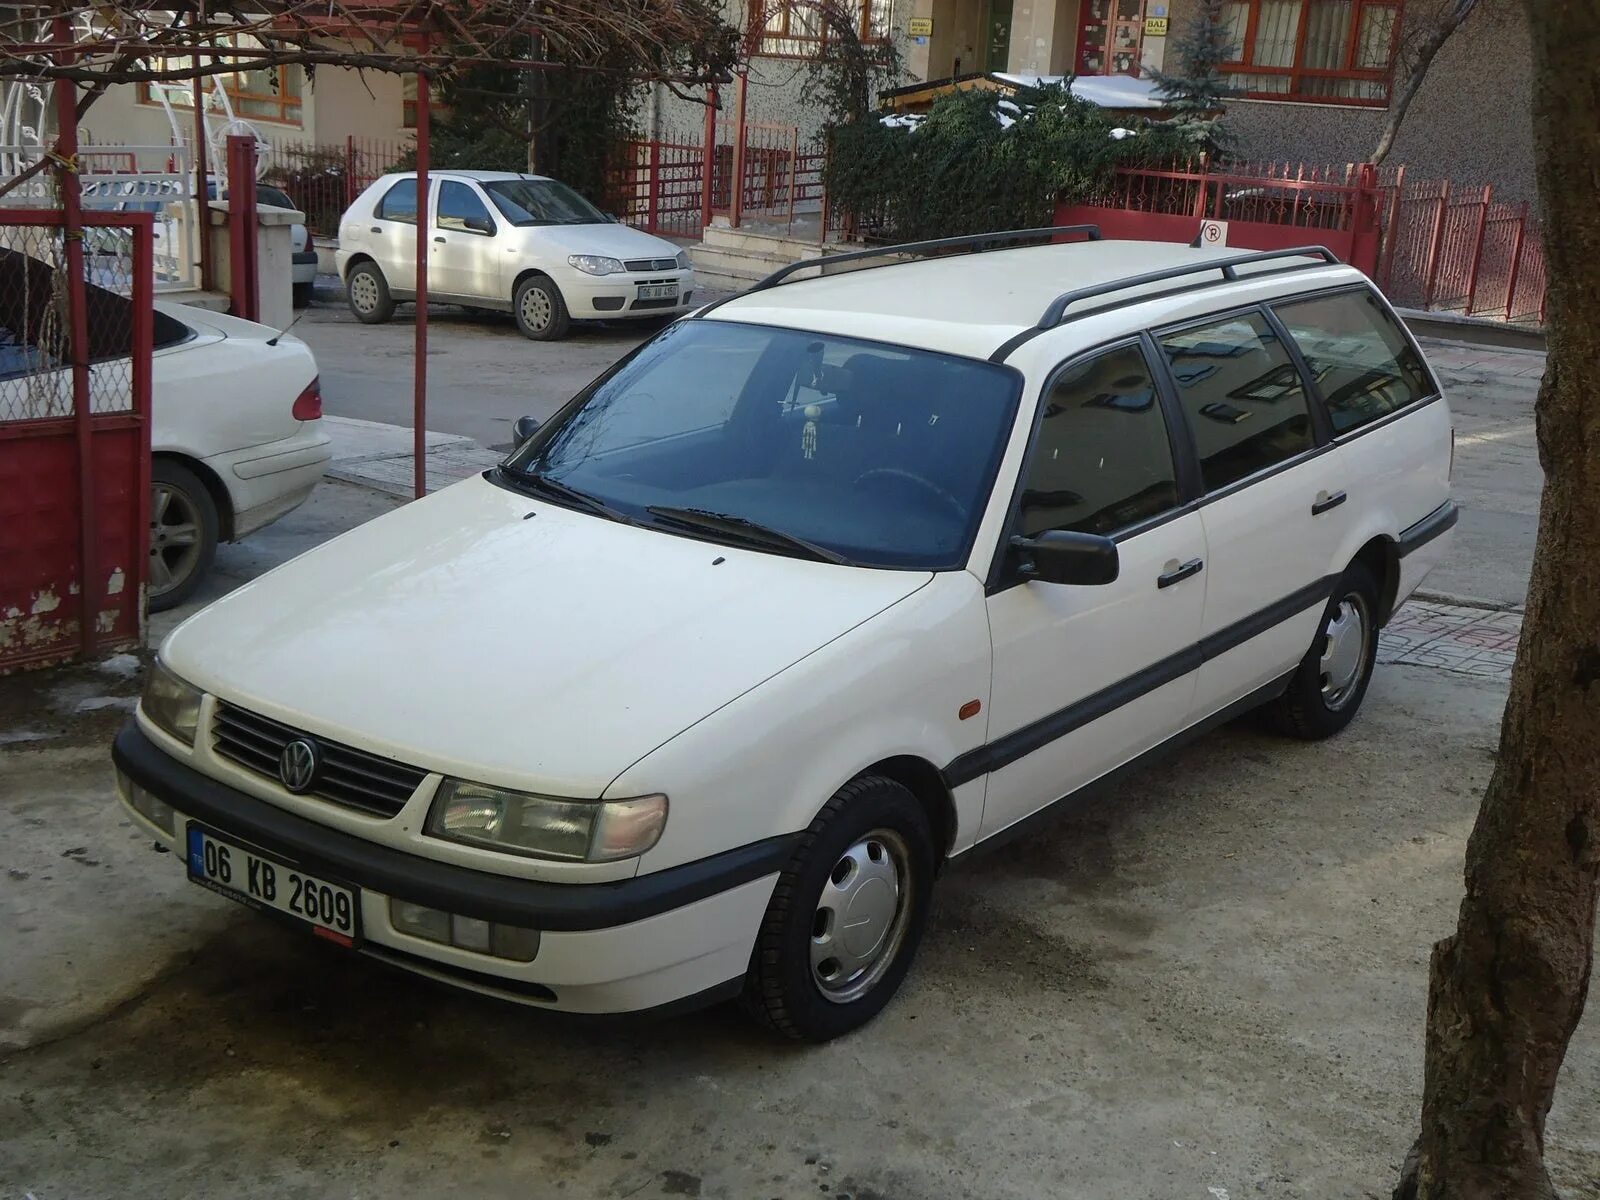 Volkswagen 1994. VW Passat 1994. Фольксваген Пассат 1994. Passat variant 1994. Фольксваген Пассат 1994 седан.